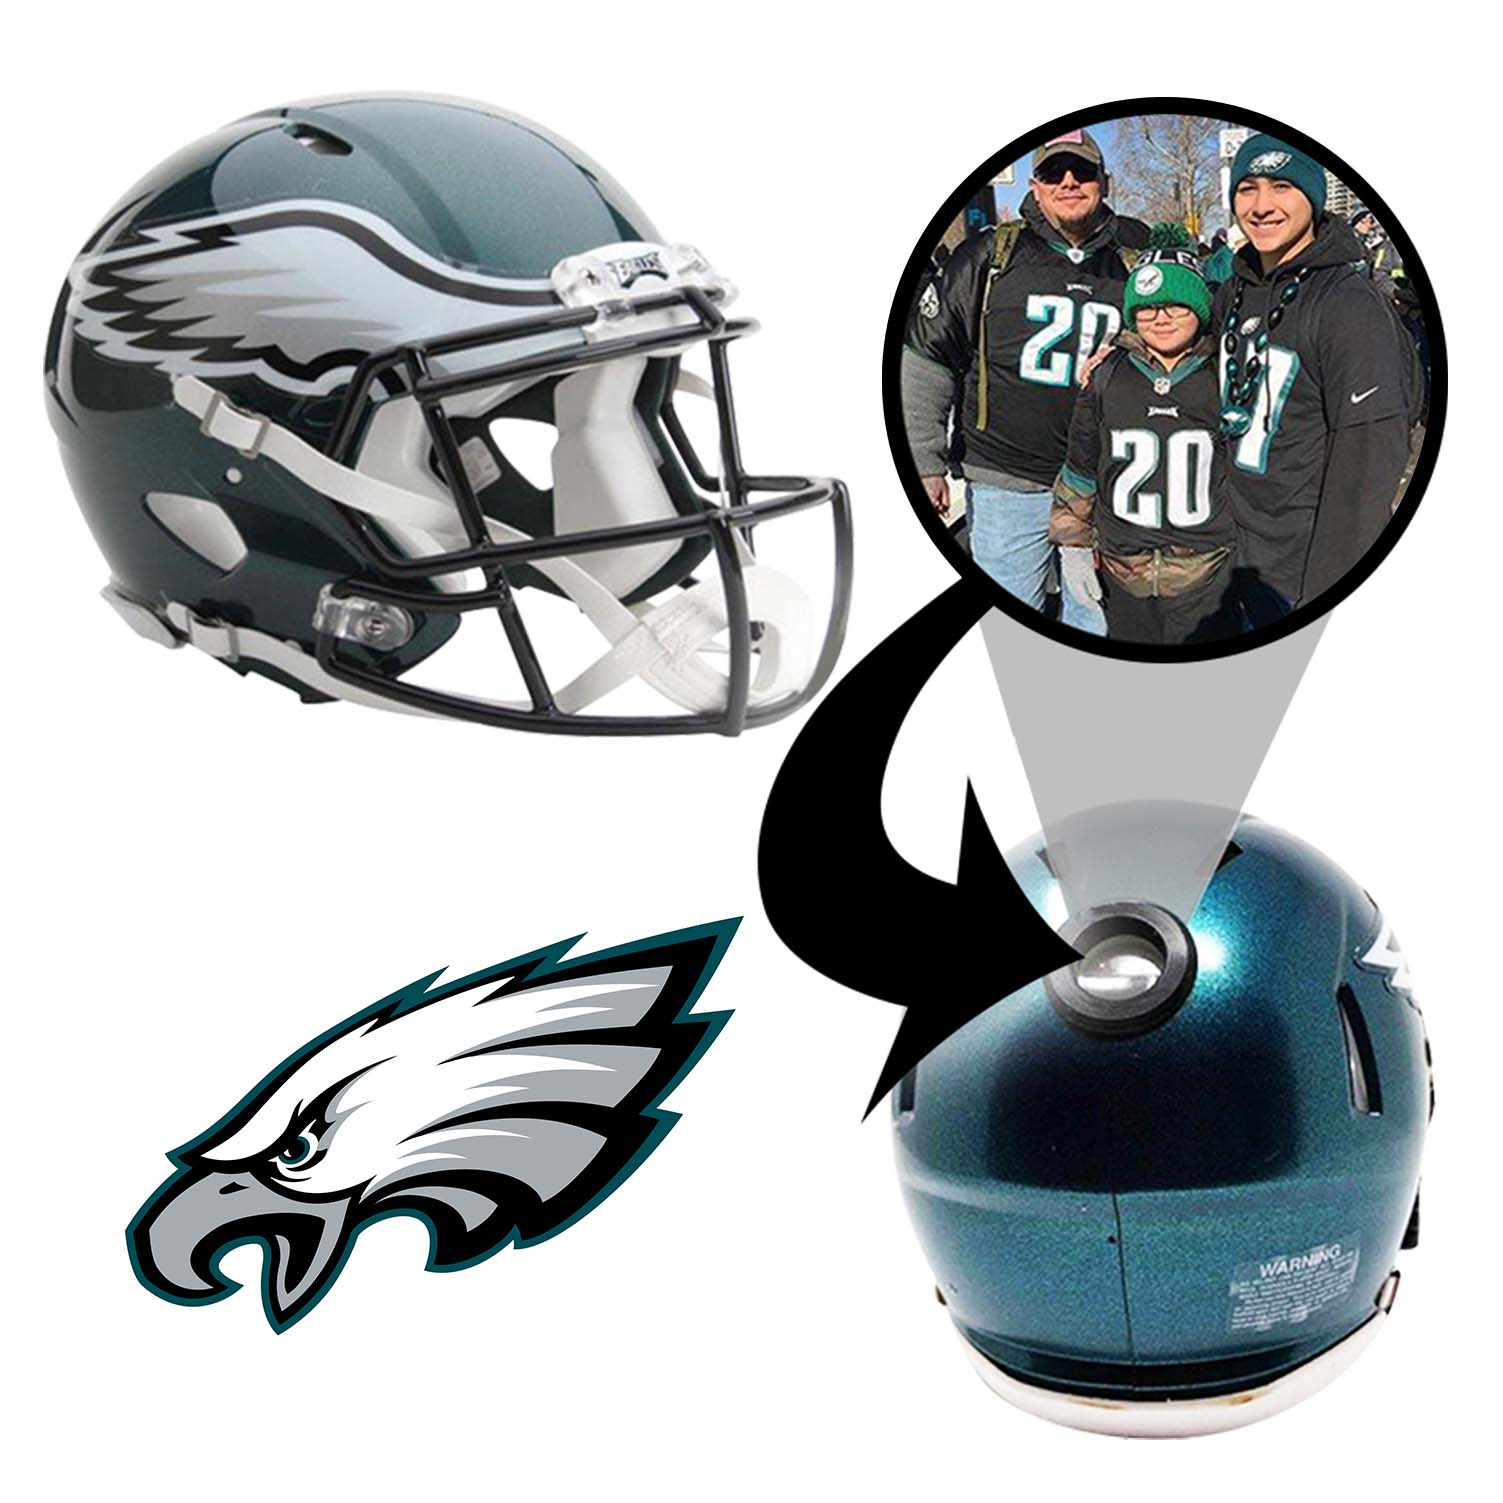 Philadelphia eagles nfl collectible mini helmetpicture insidefanz collectibles â fanz collectibles